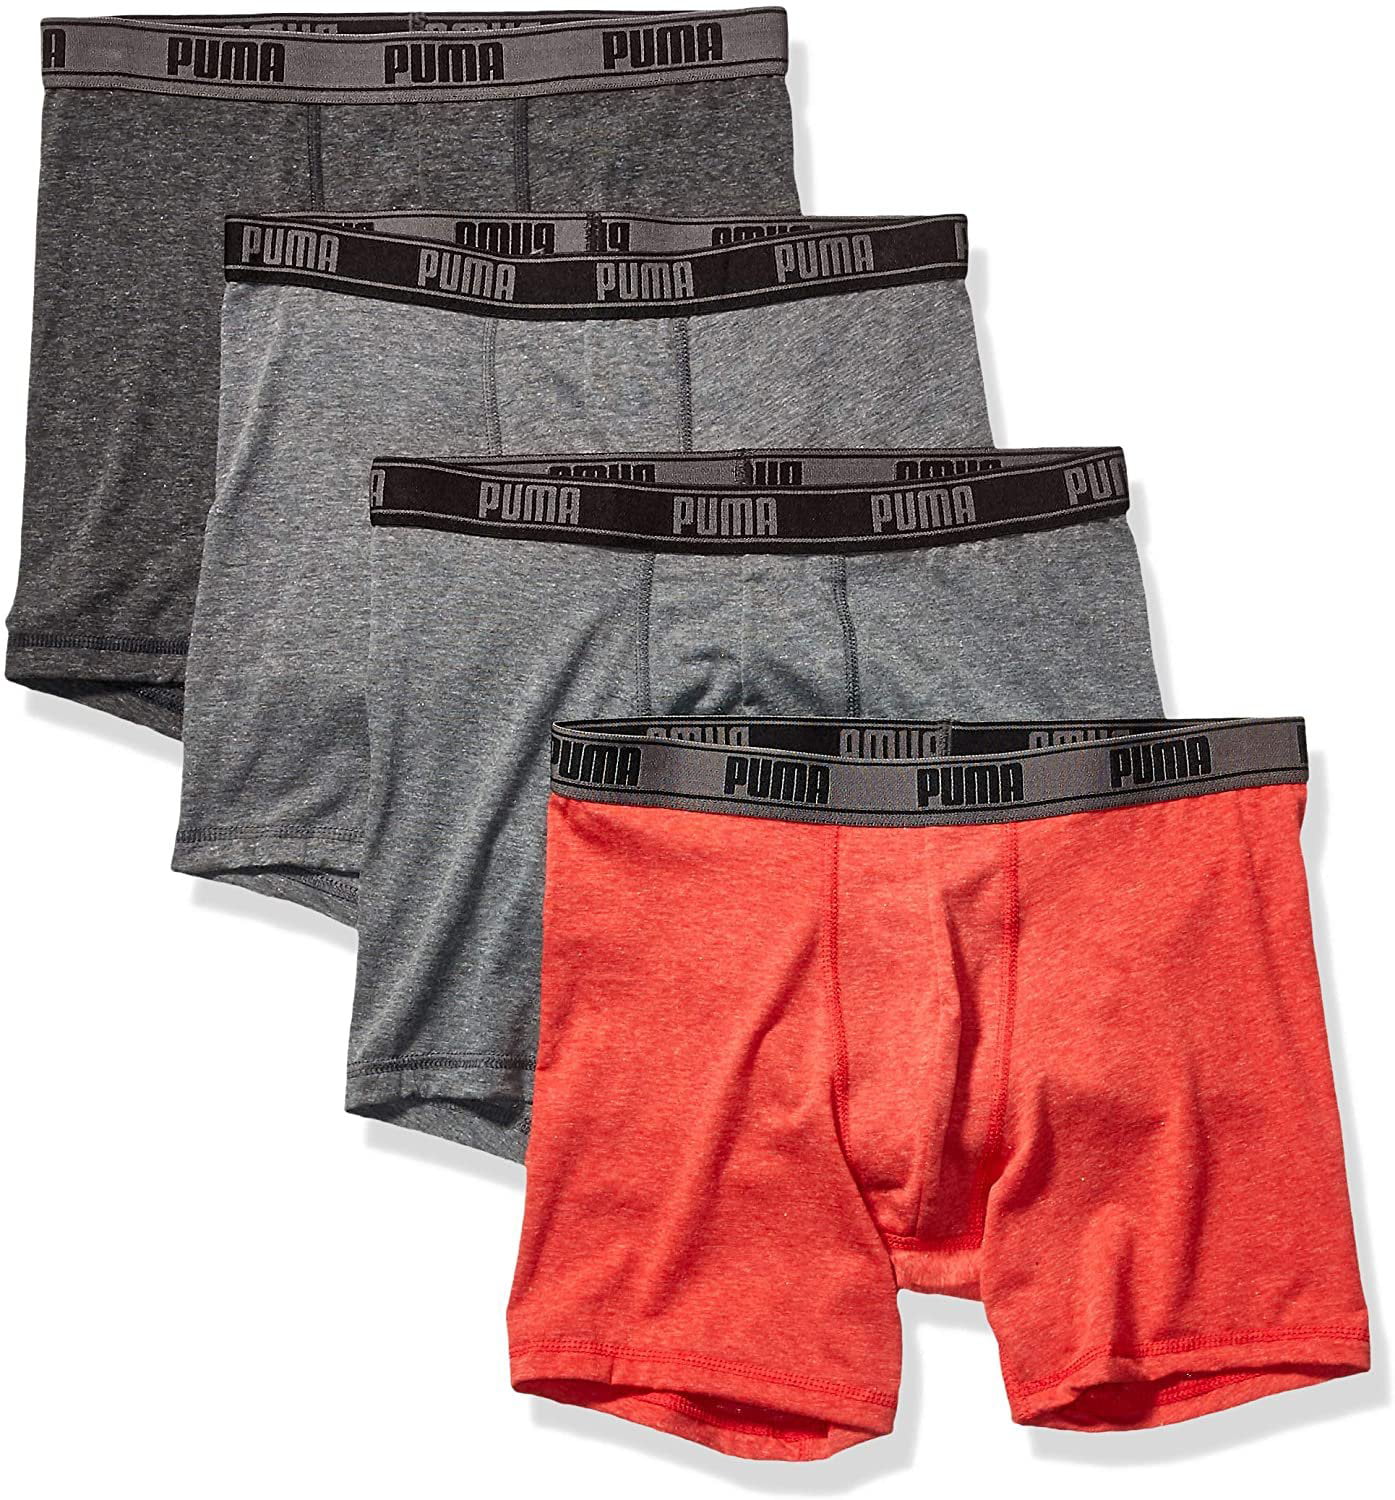 PUMA Mens Underwear - Walmart.com